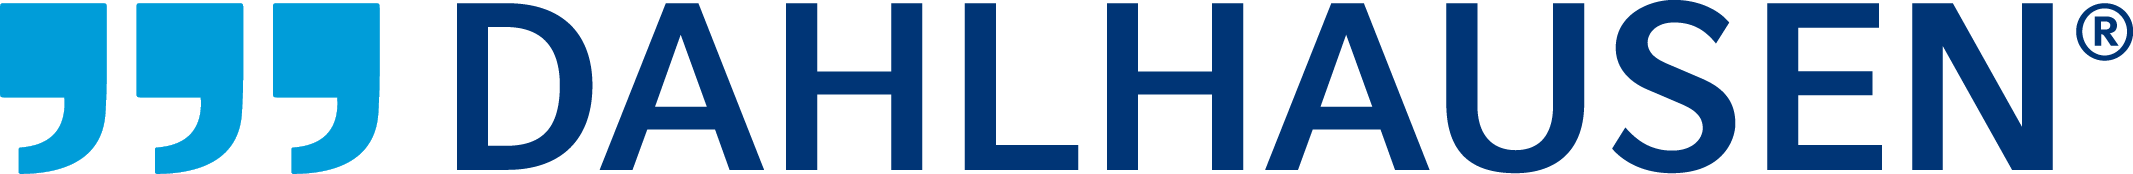 Dahlhausen Logo